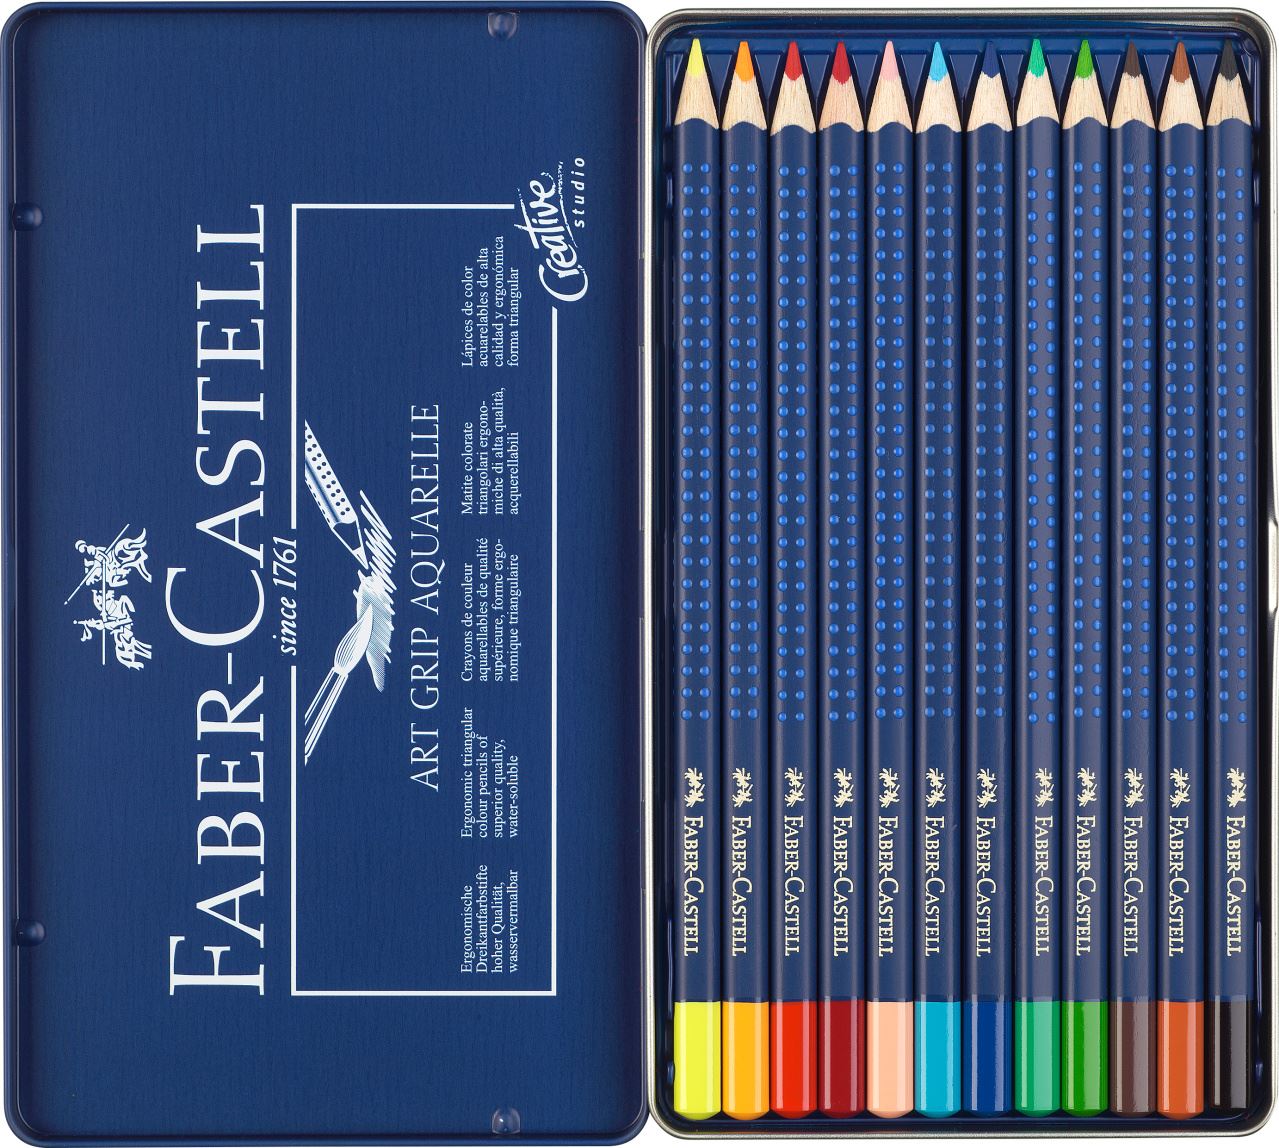 Faber-Castell - Watercolour pencil Art Grip Aquarelle tin of 12